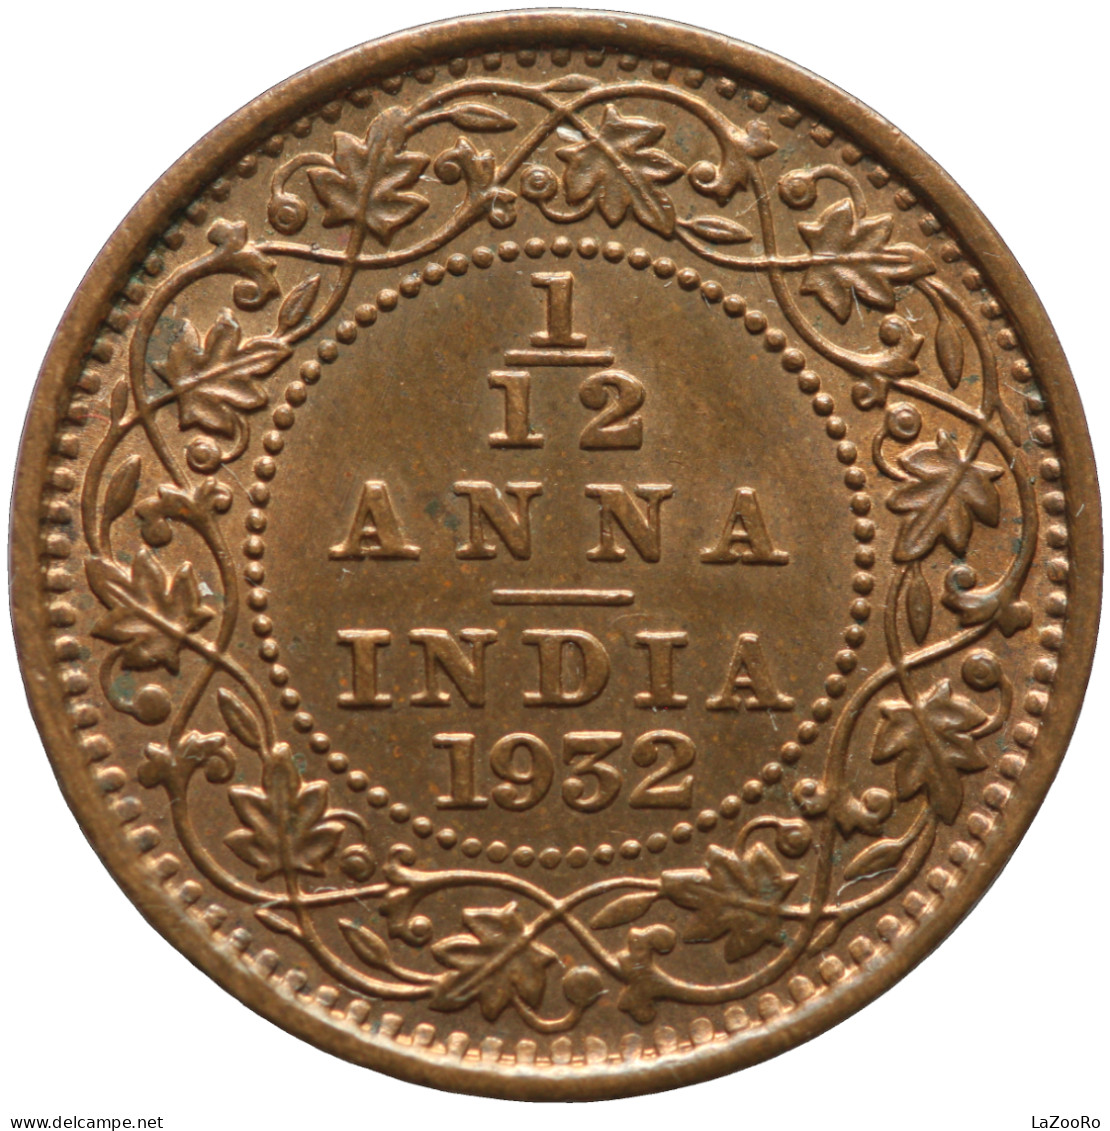 LaZooRo: British India 1/12 Anna 1932 UNC - Kolonies